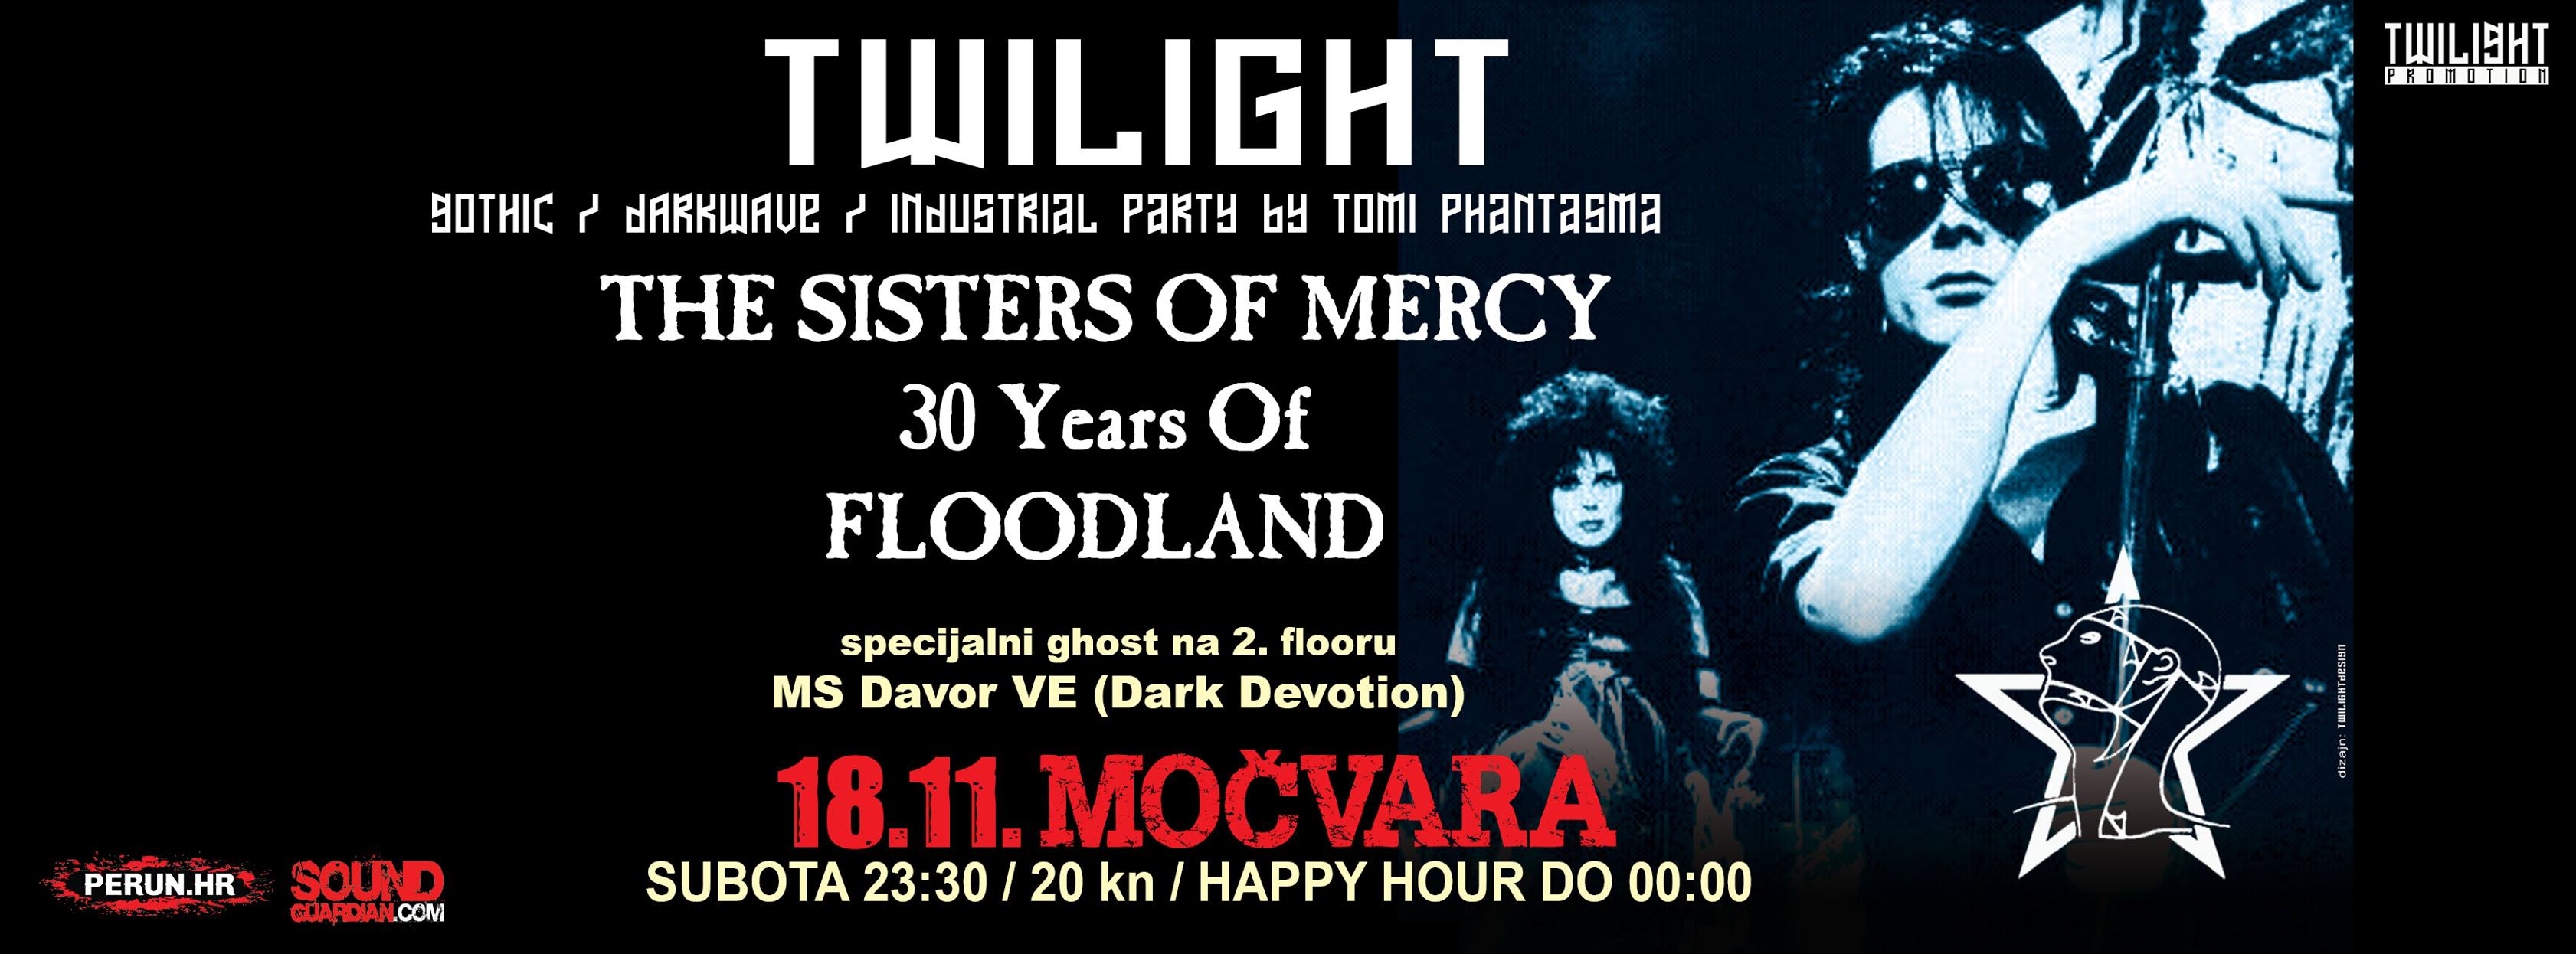 [:en]Twilight -The Sisters Of Mercy night 18.11.2017. Mochvara